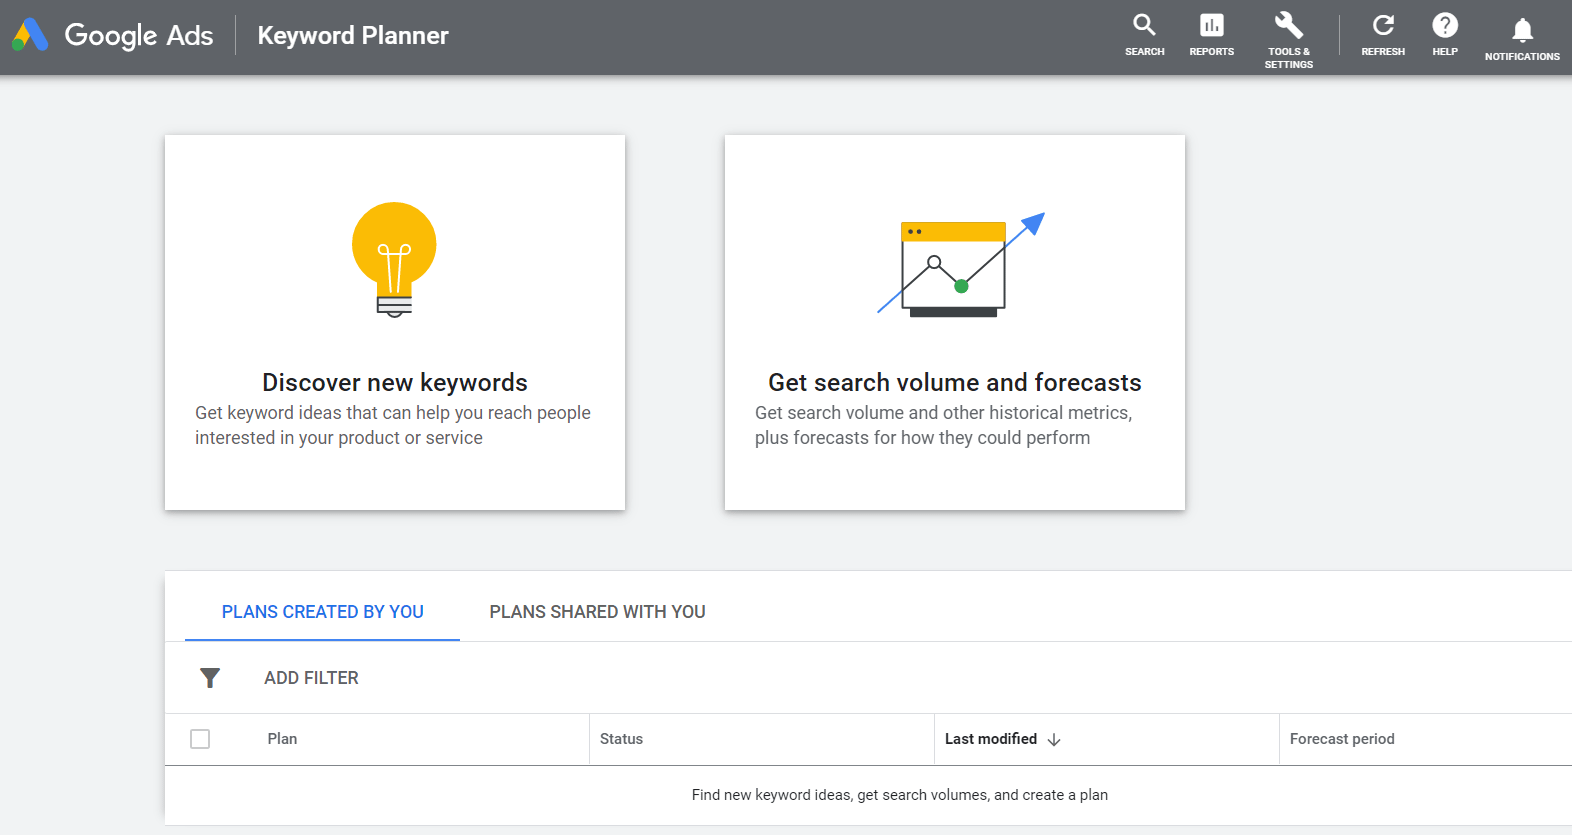 Google Keyword Planner 是一個有用的工具，可以為您的聯屬網路營銷策略查找相關的搜索詞。 